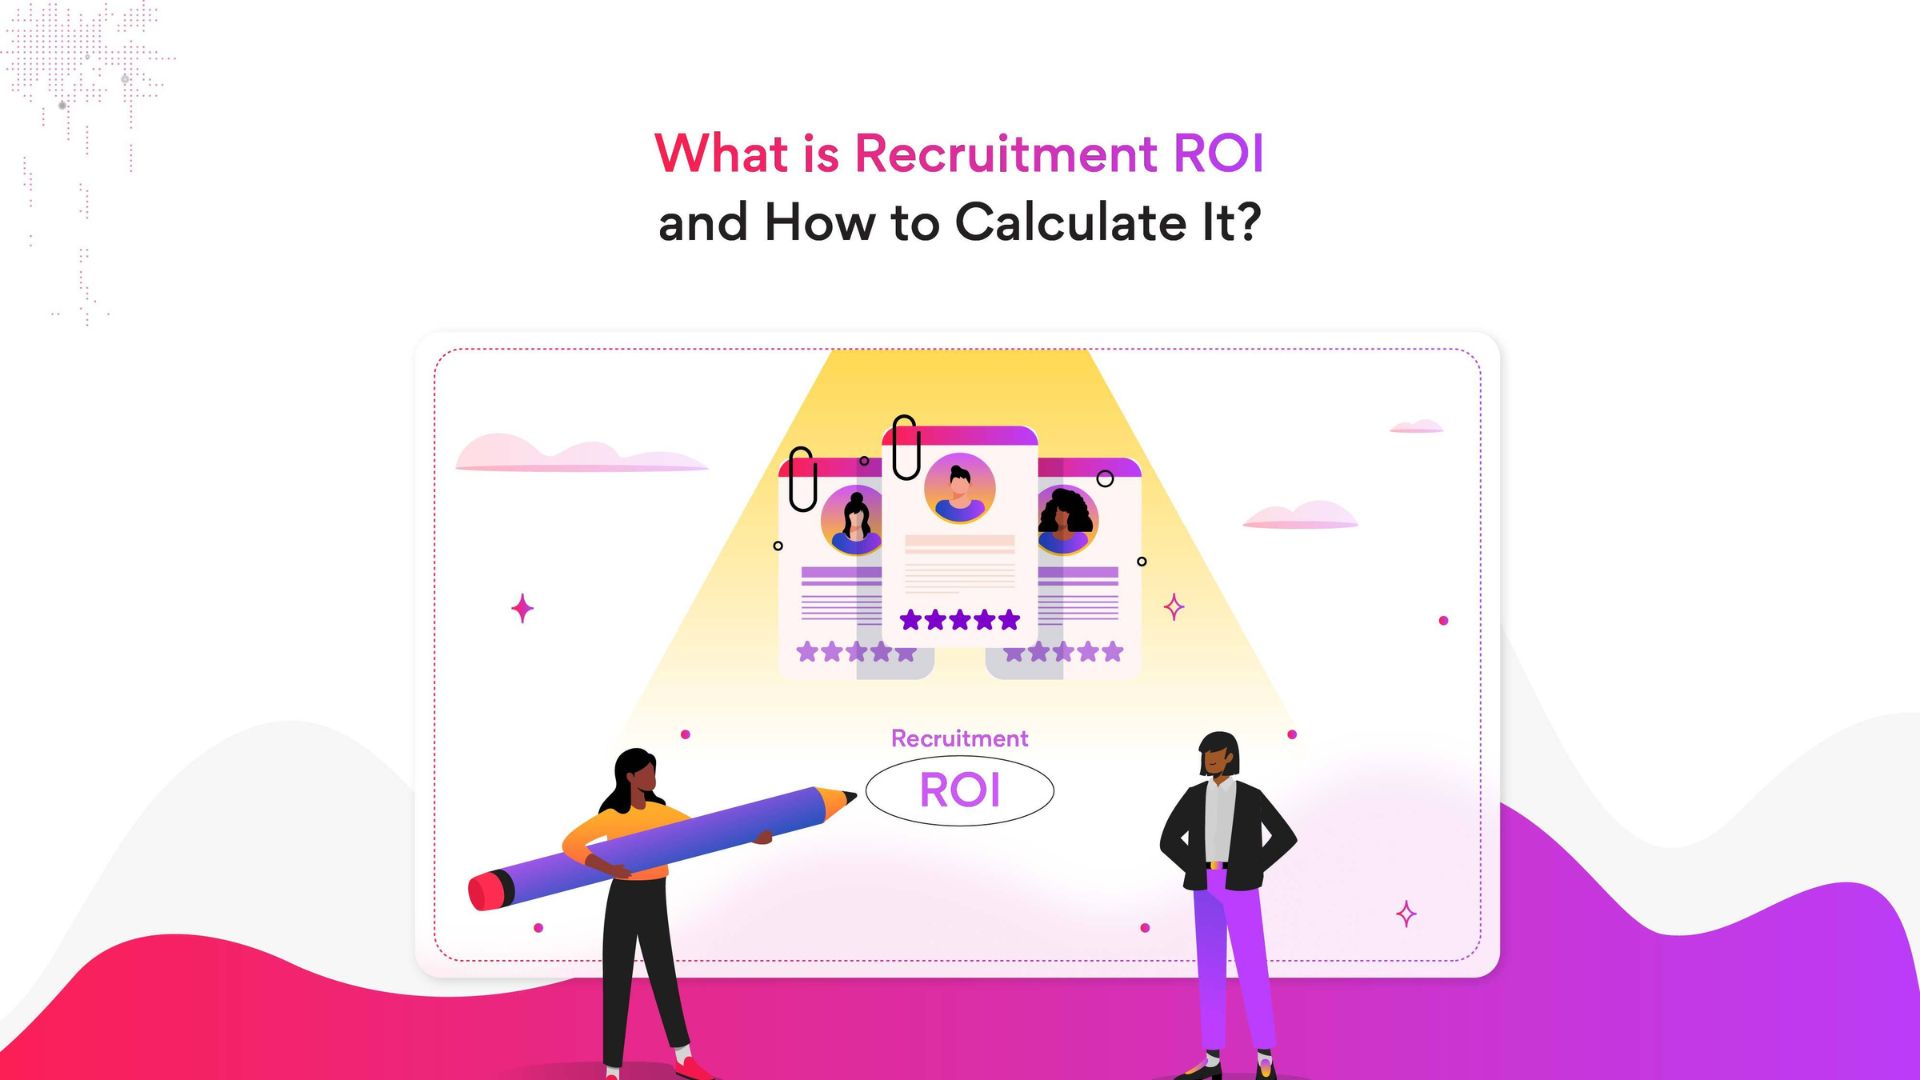 6 Most Important KPIs to Measure Recruitment ROI